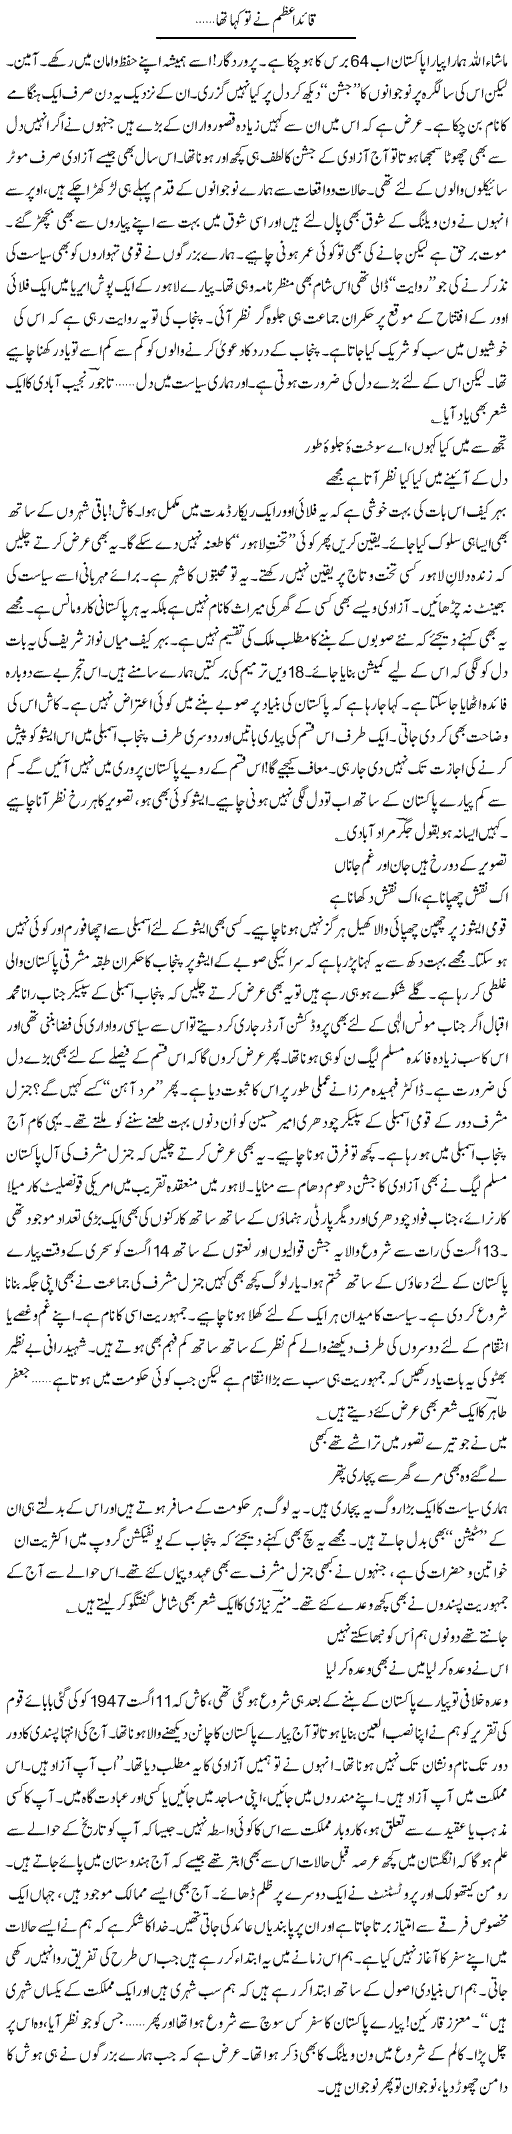 Quaid Azam Express Column Ijaz Abdul Hafeez 17 August 2011